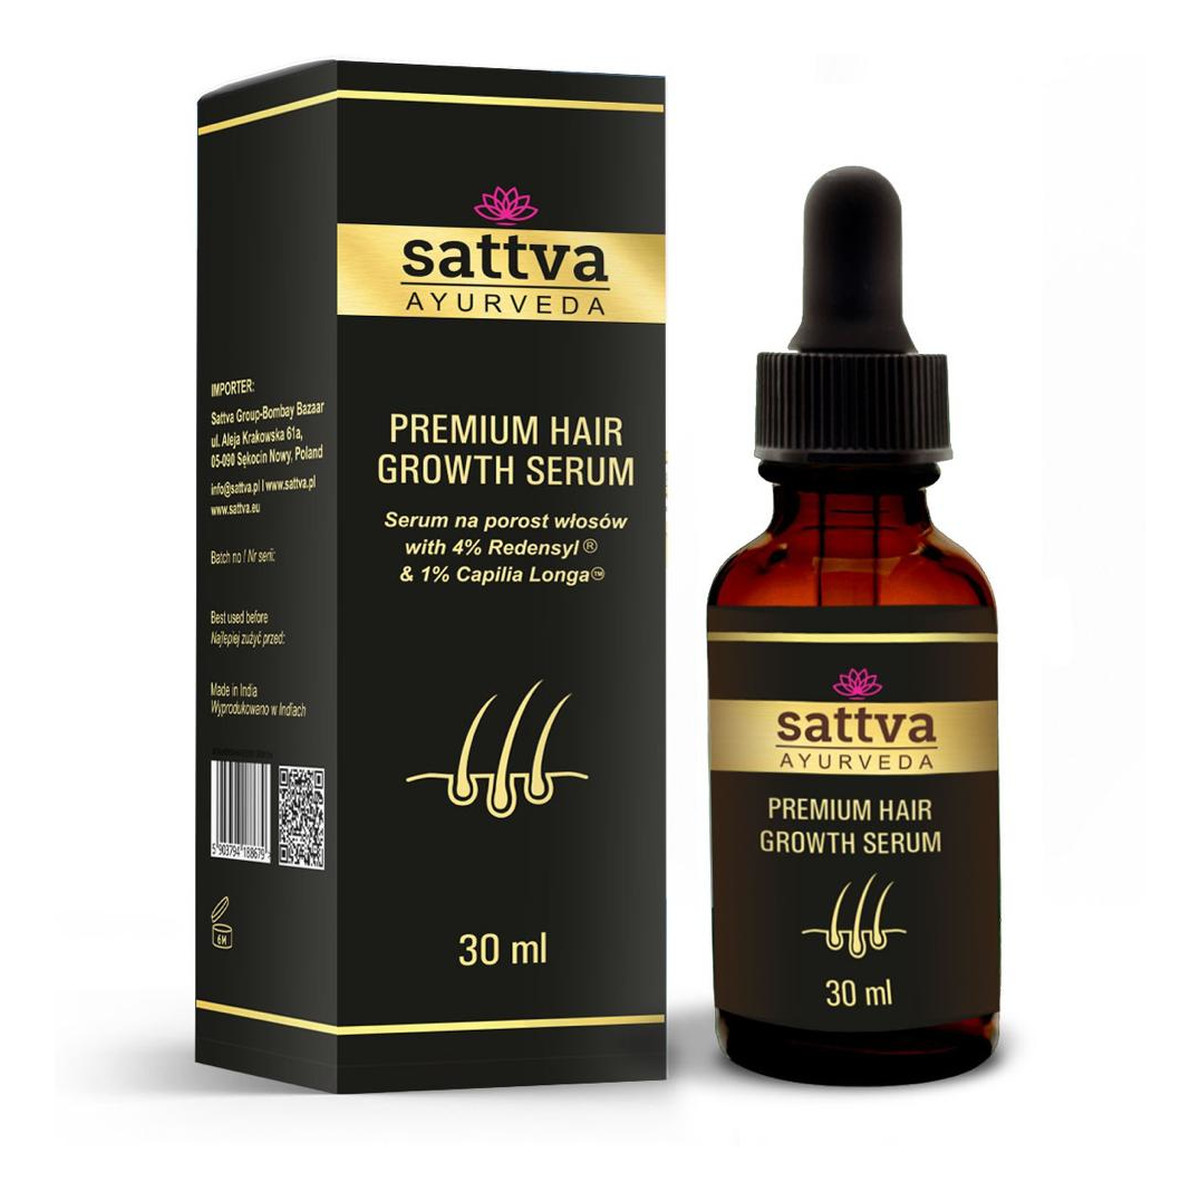 Sattva Premium hair growth serum serum na porost włosów 30ml